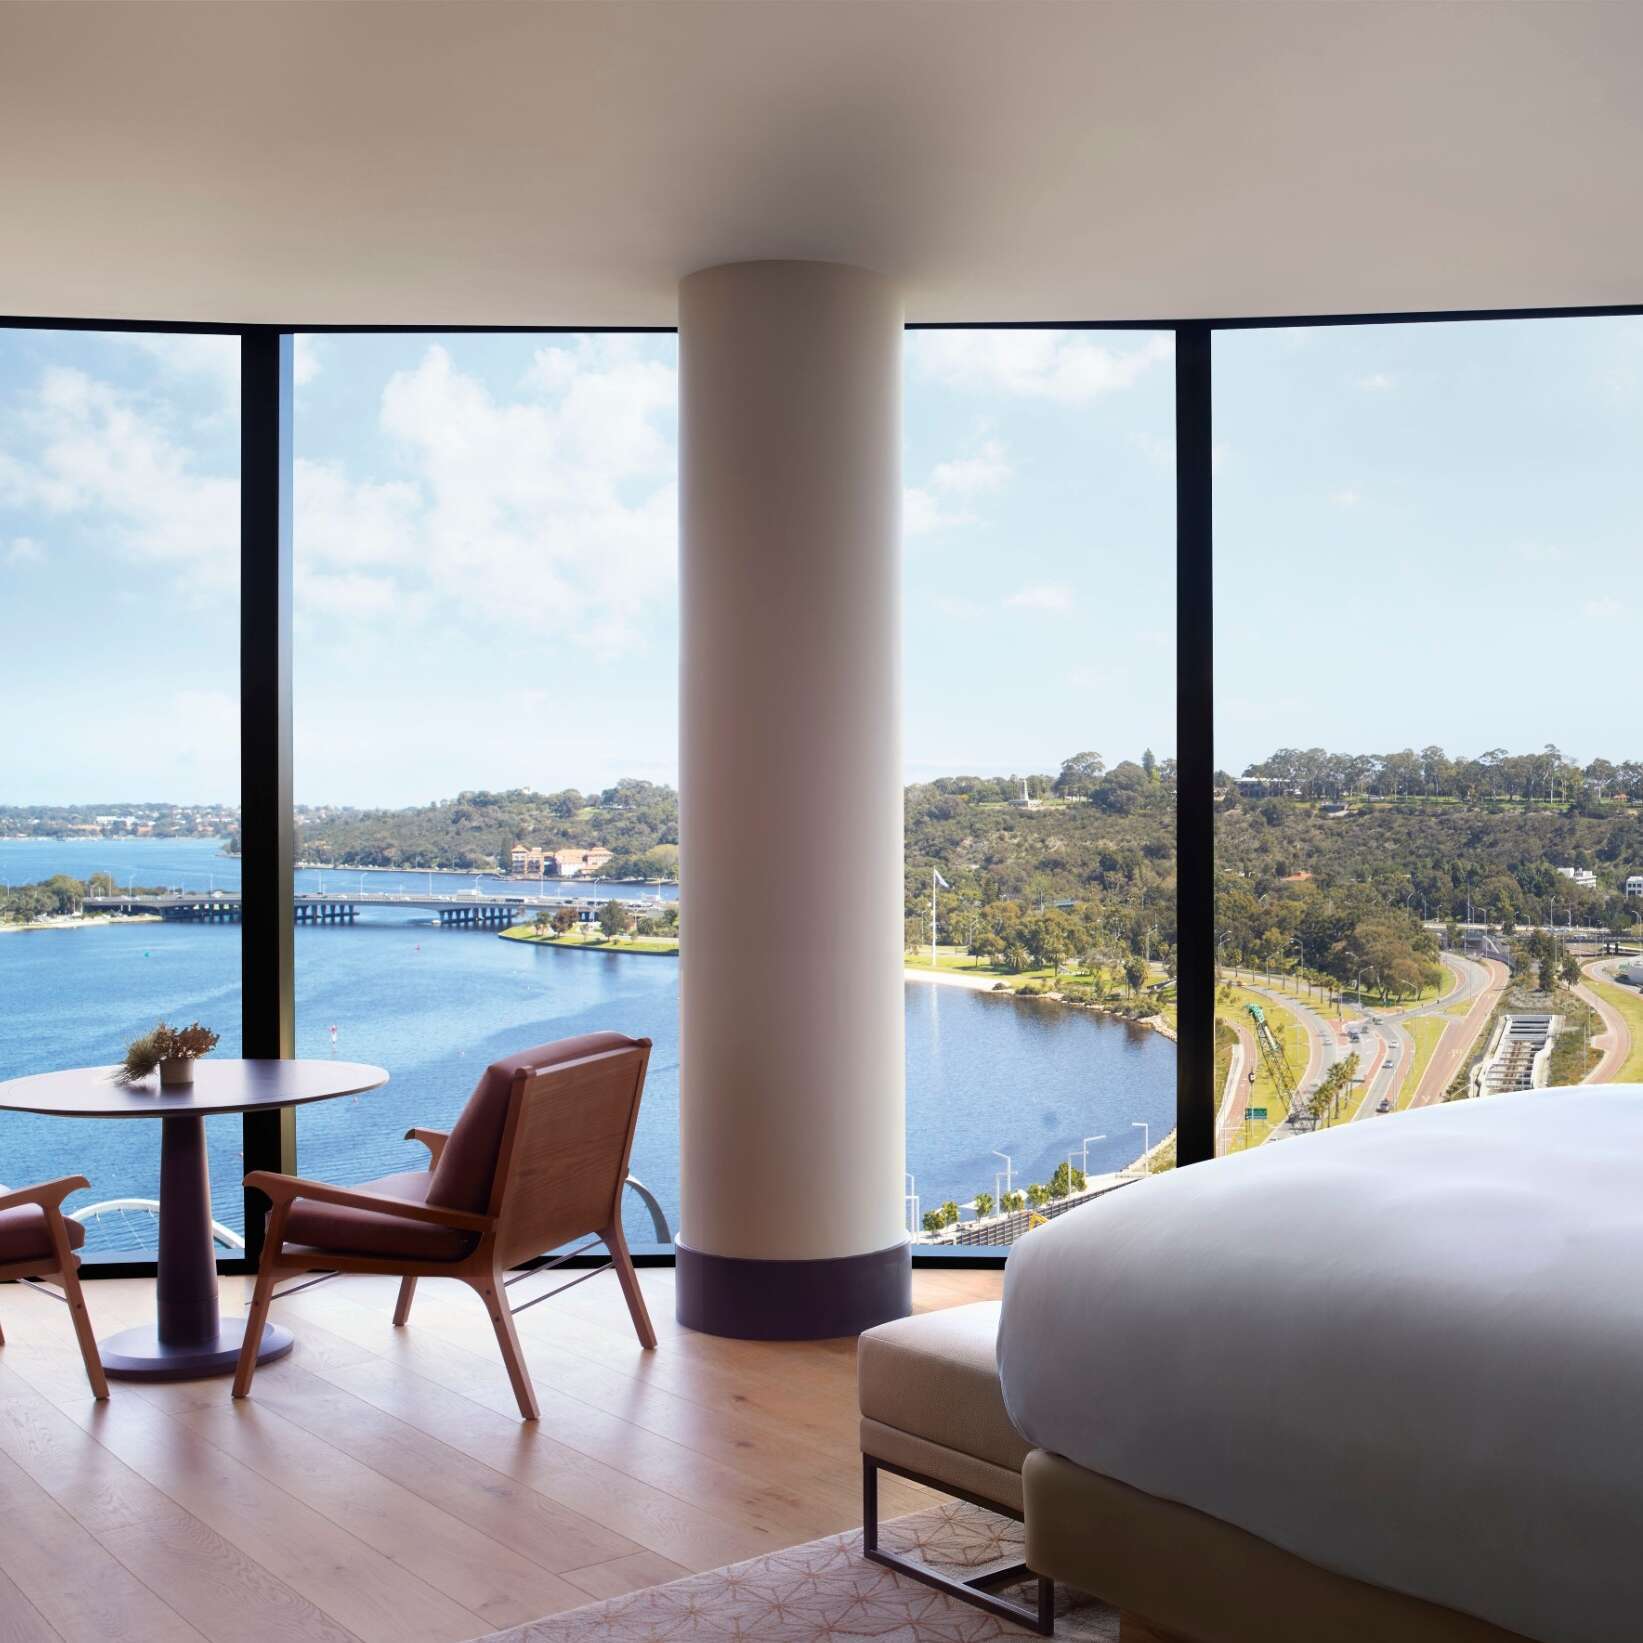 Ritz-Carlton Perth, Swan River Room, Perth, Western Australia © The Ritz-Carlton Perth 